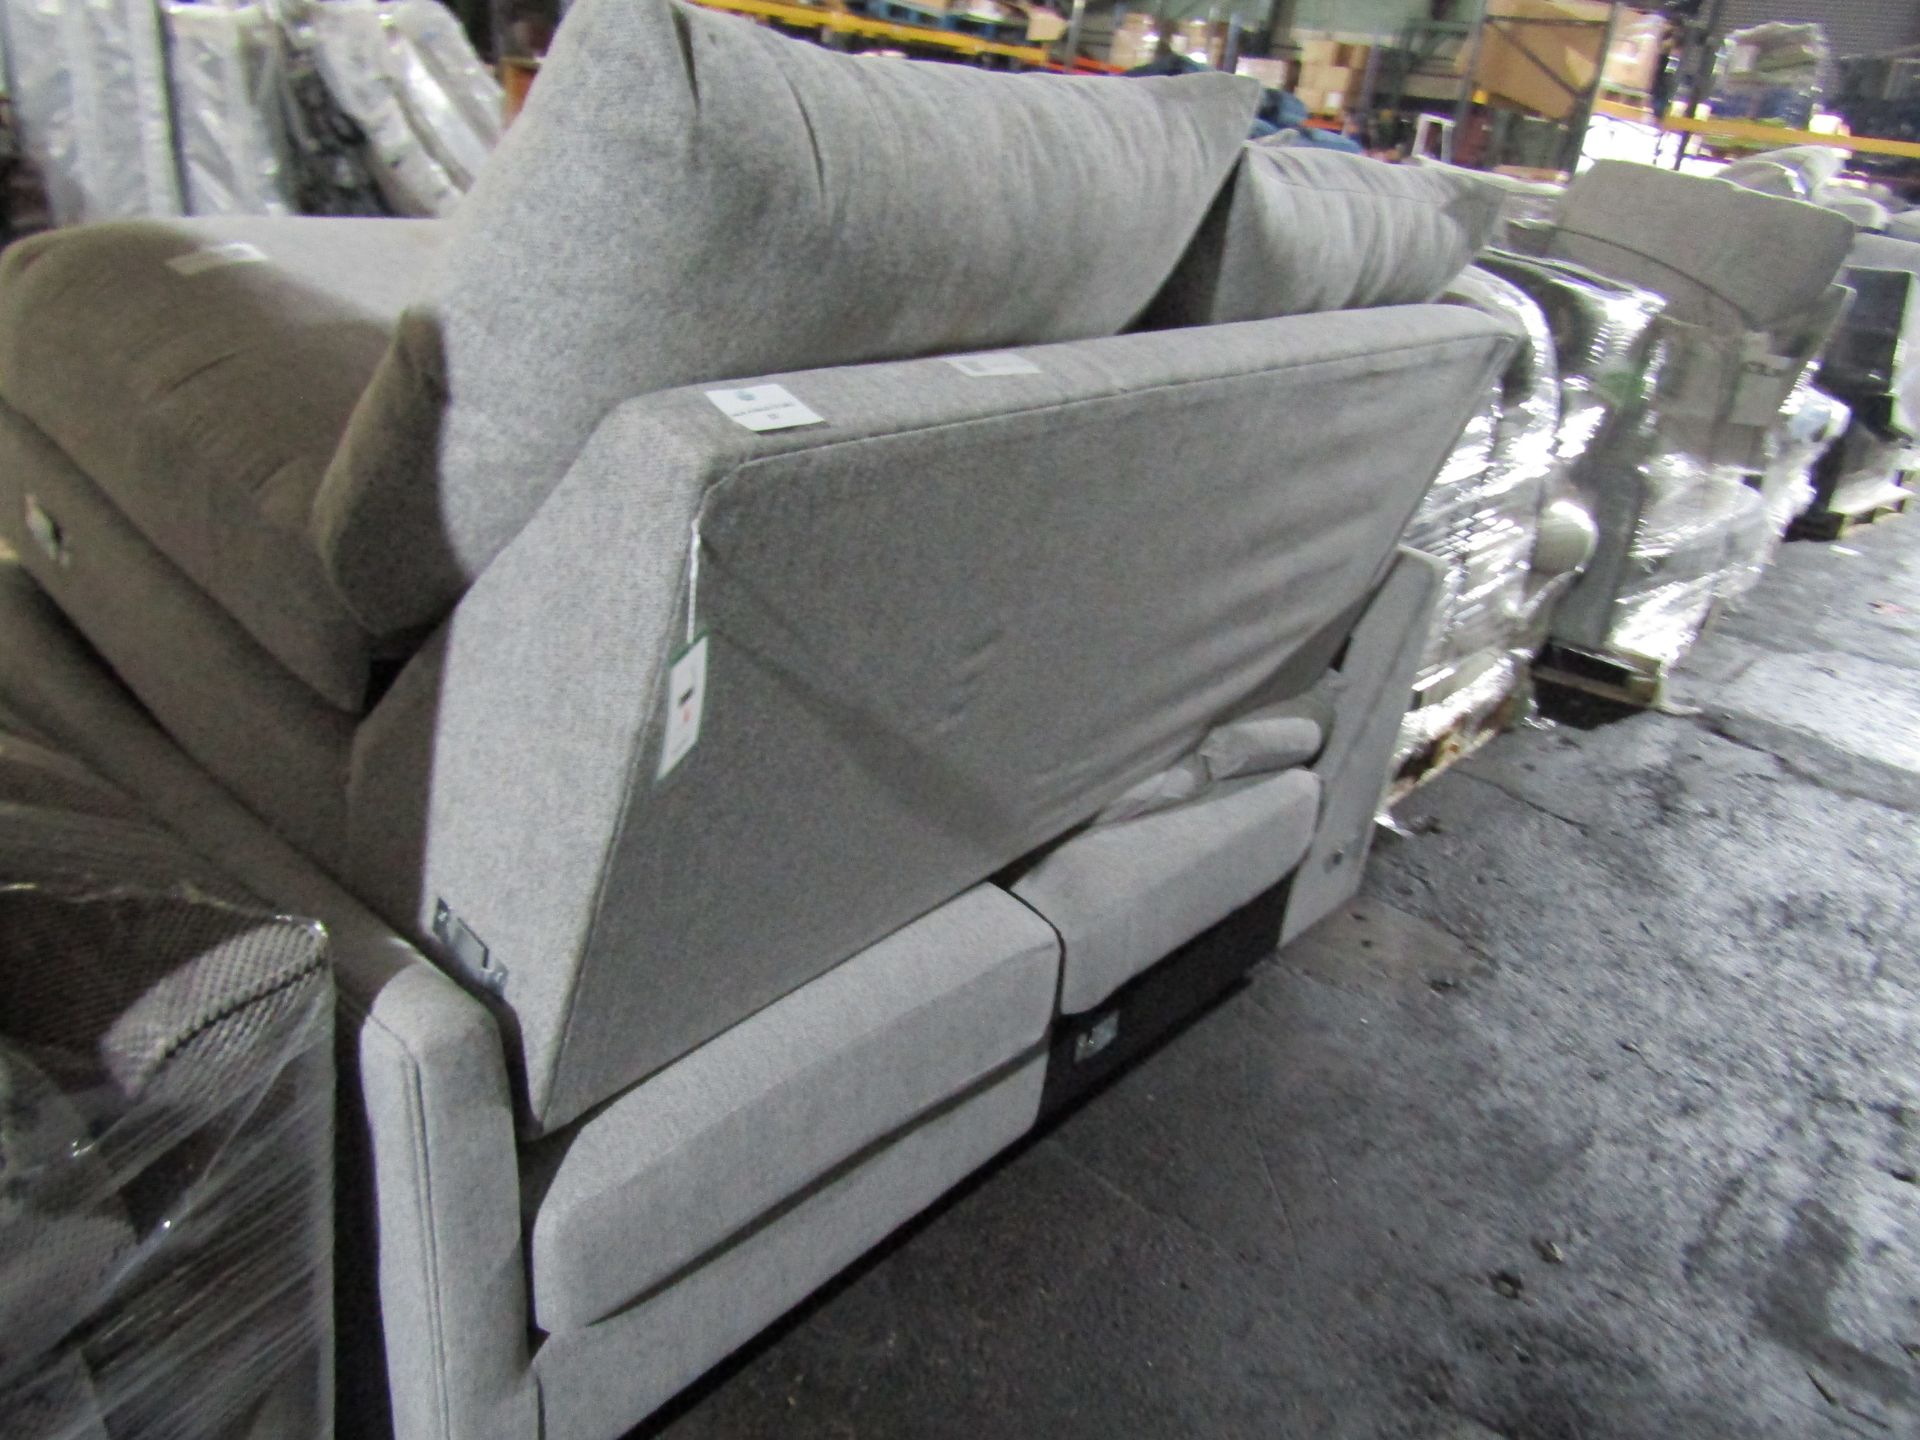 Oak Furnitureland Miami Corner Sofa in Grey fabric RRP 1449.99incomplete, wrong armsThis lot of